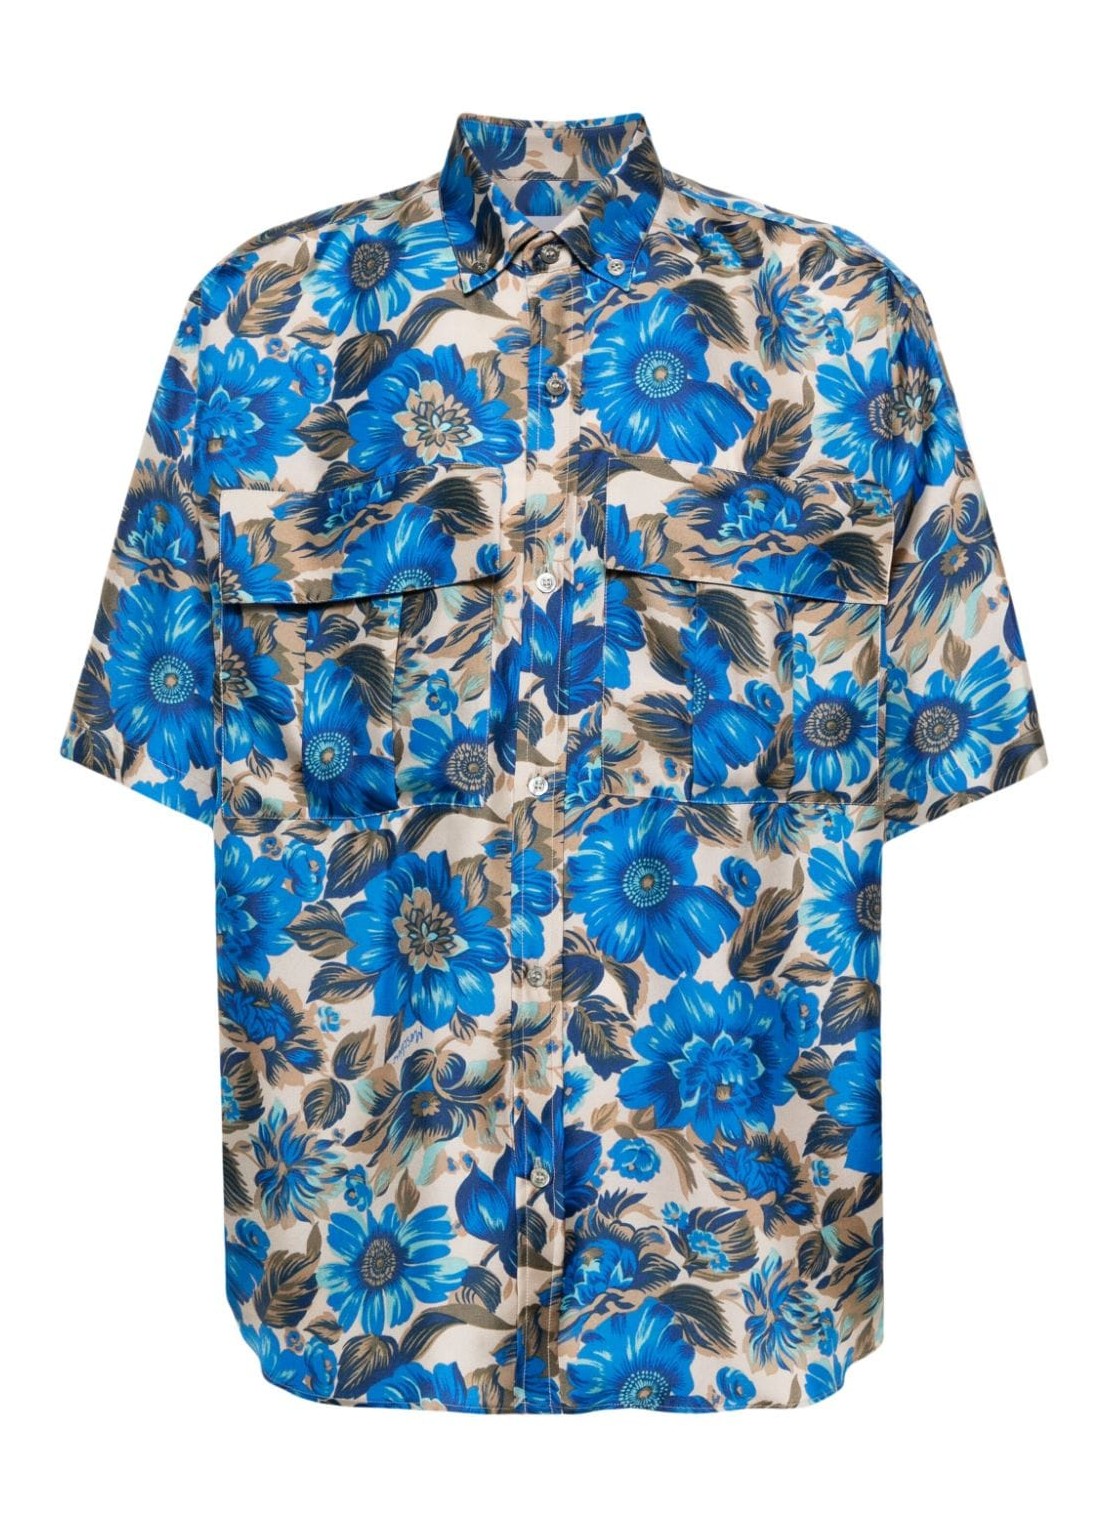 Camiseria moschino couture shirt man blouse 02132057 a1365 talla multi
 